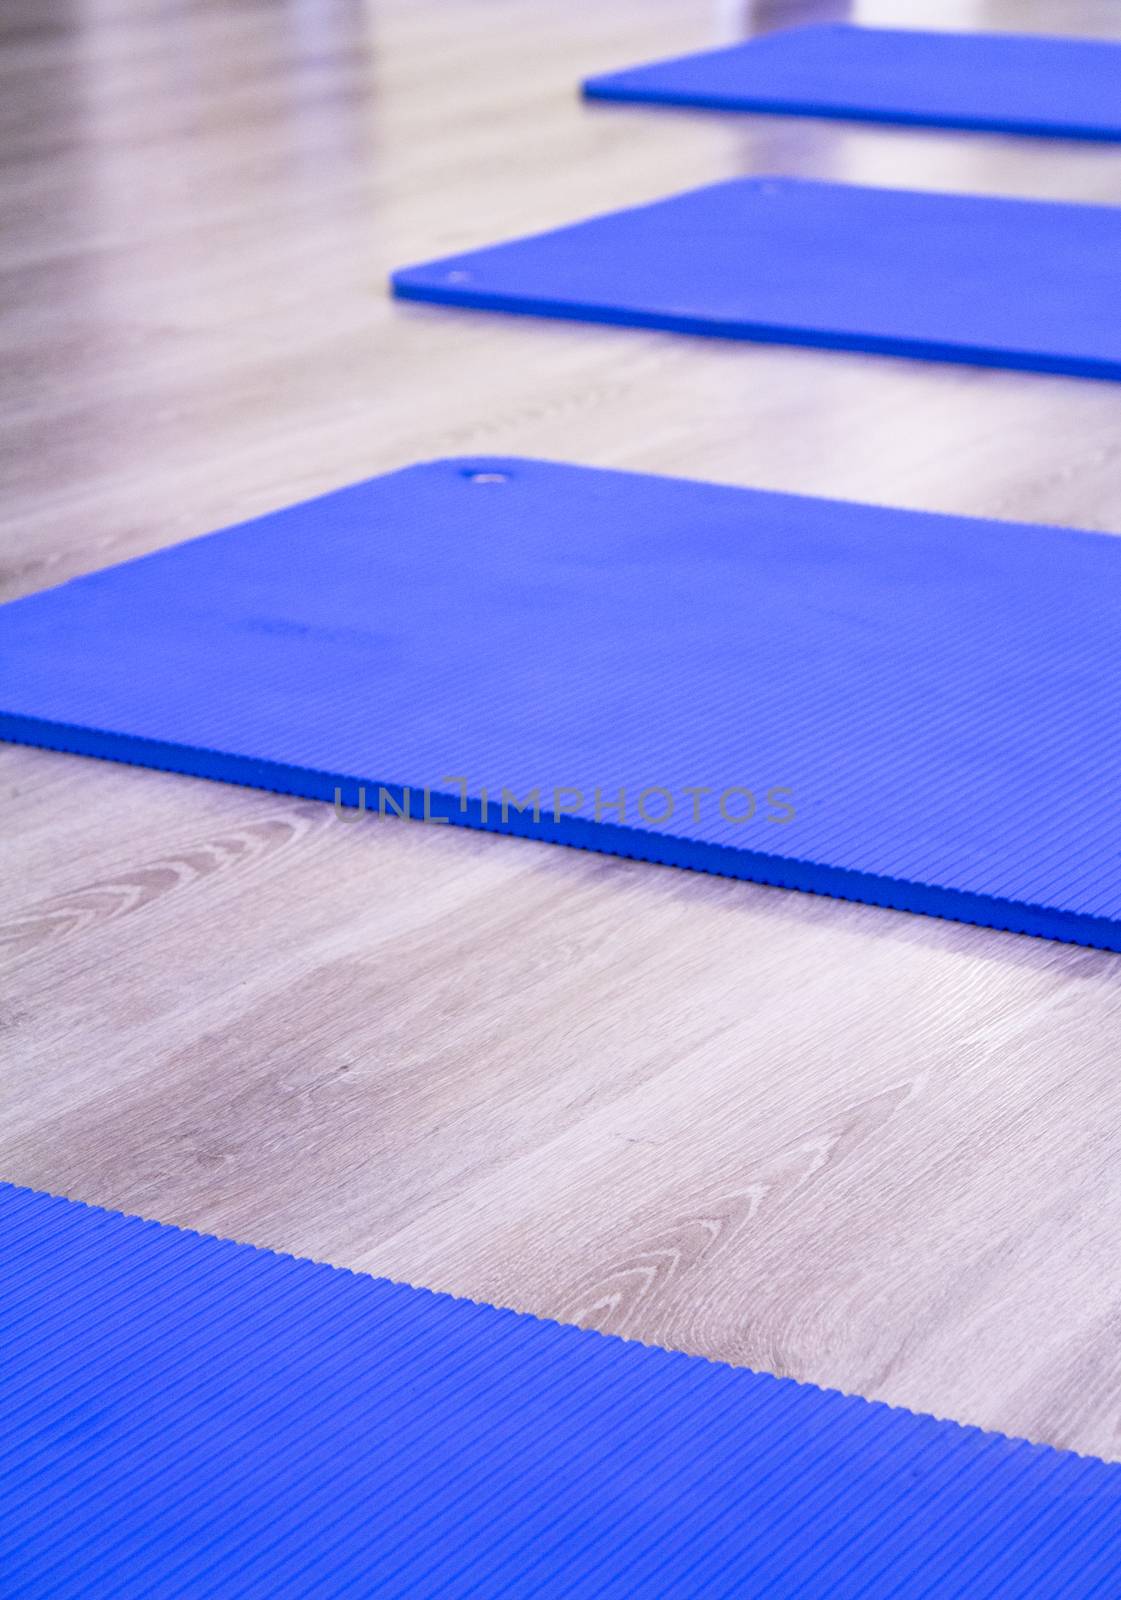 Yoga mat on wooden floor by GemaIbarra